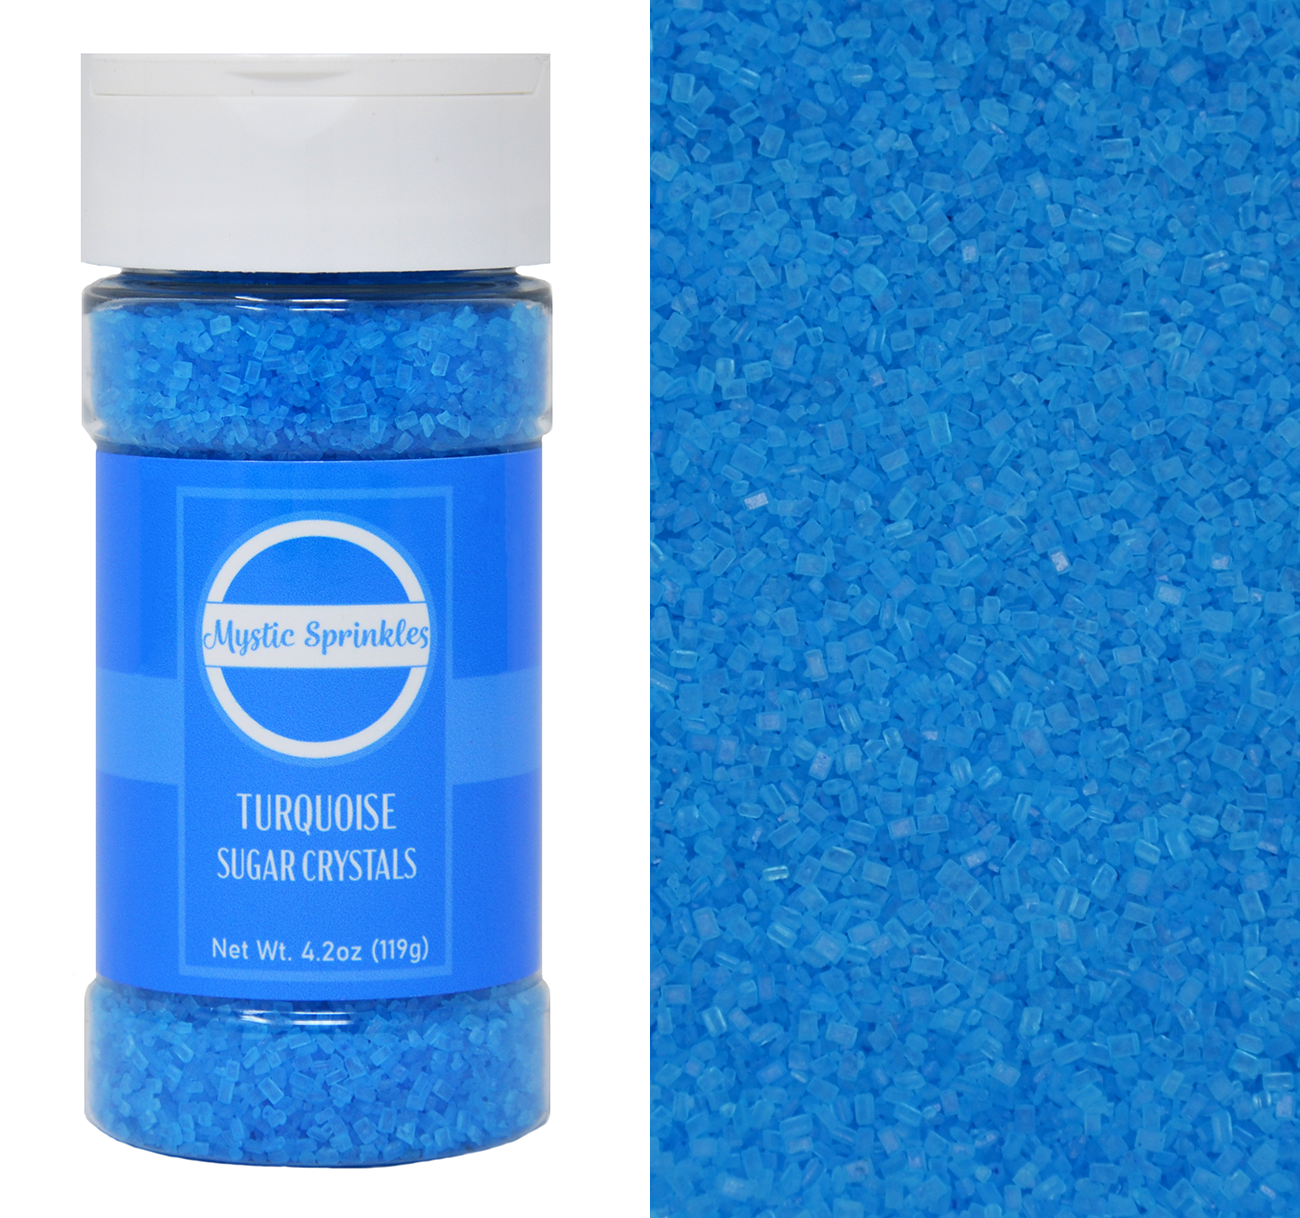 Turquoise - Blue Sugar Crystals 4.2oz Bottle